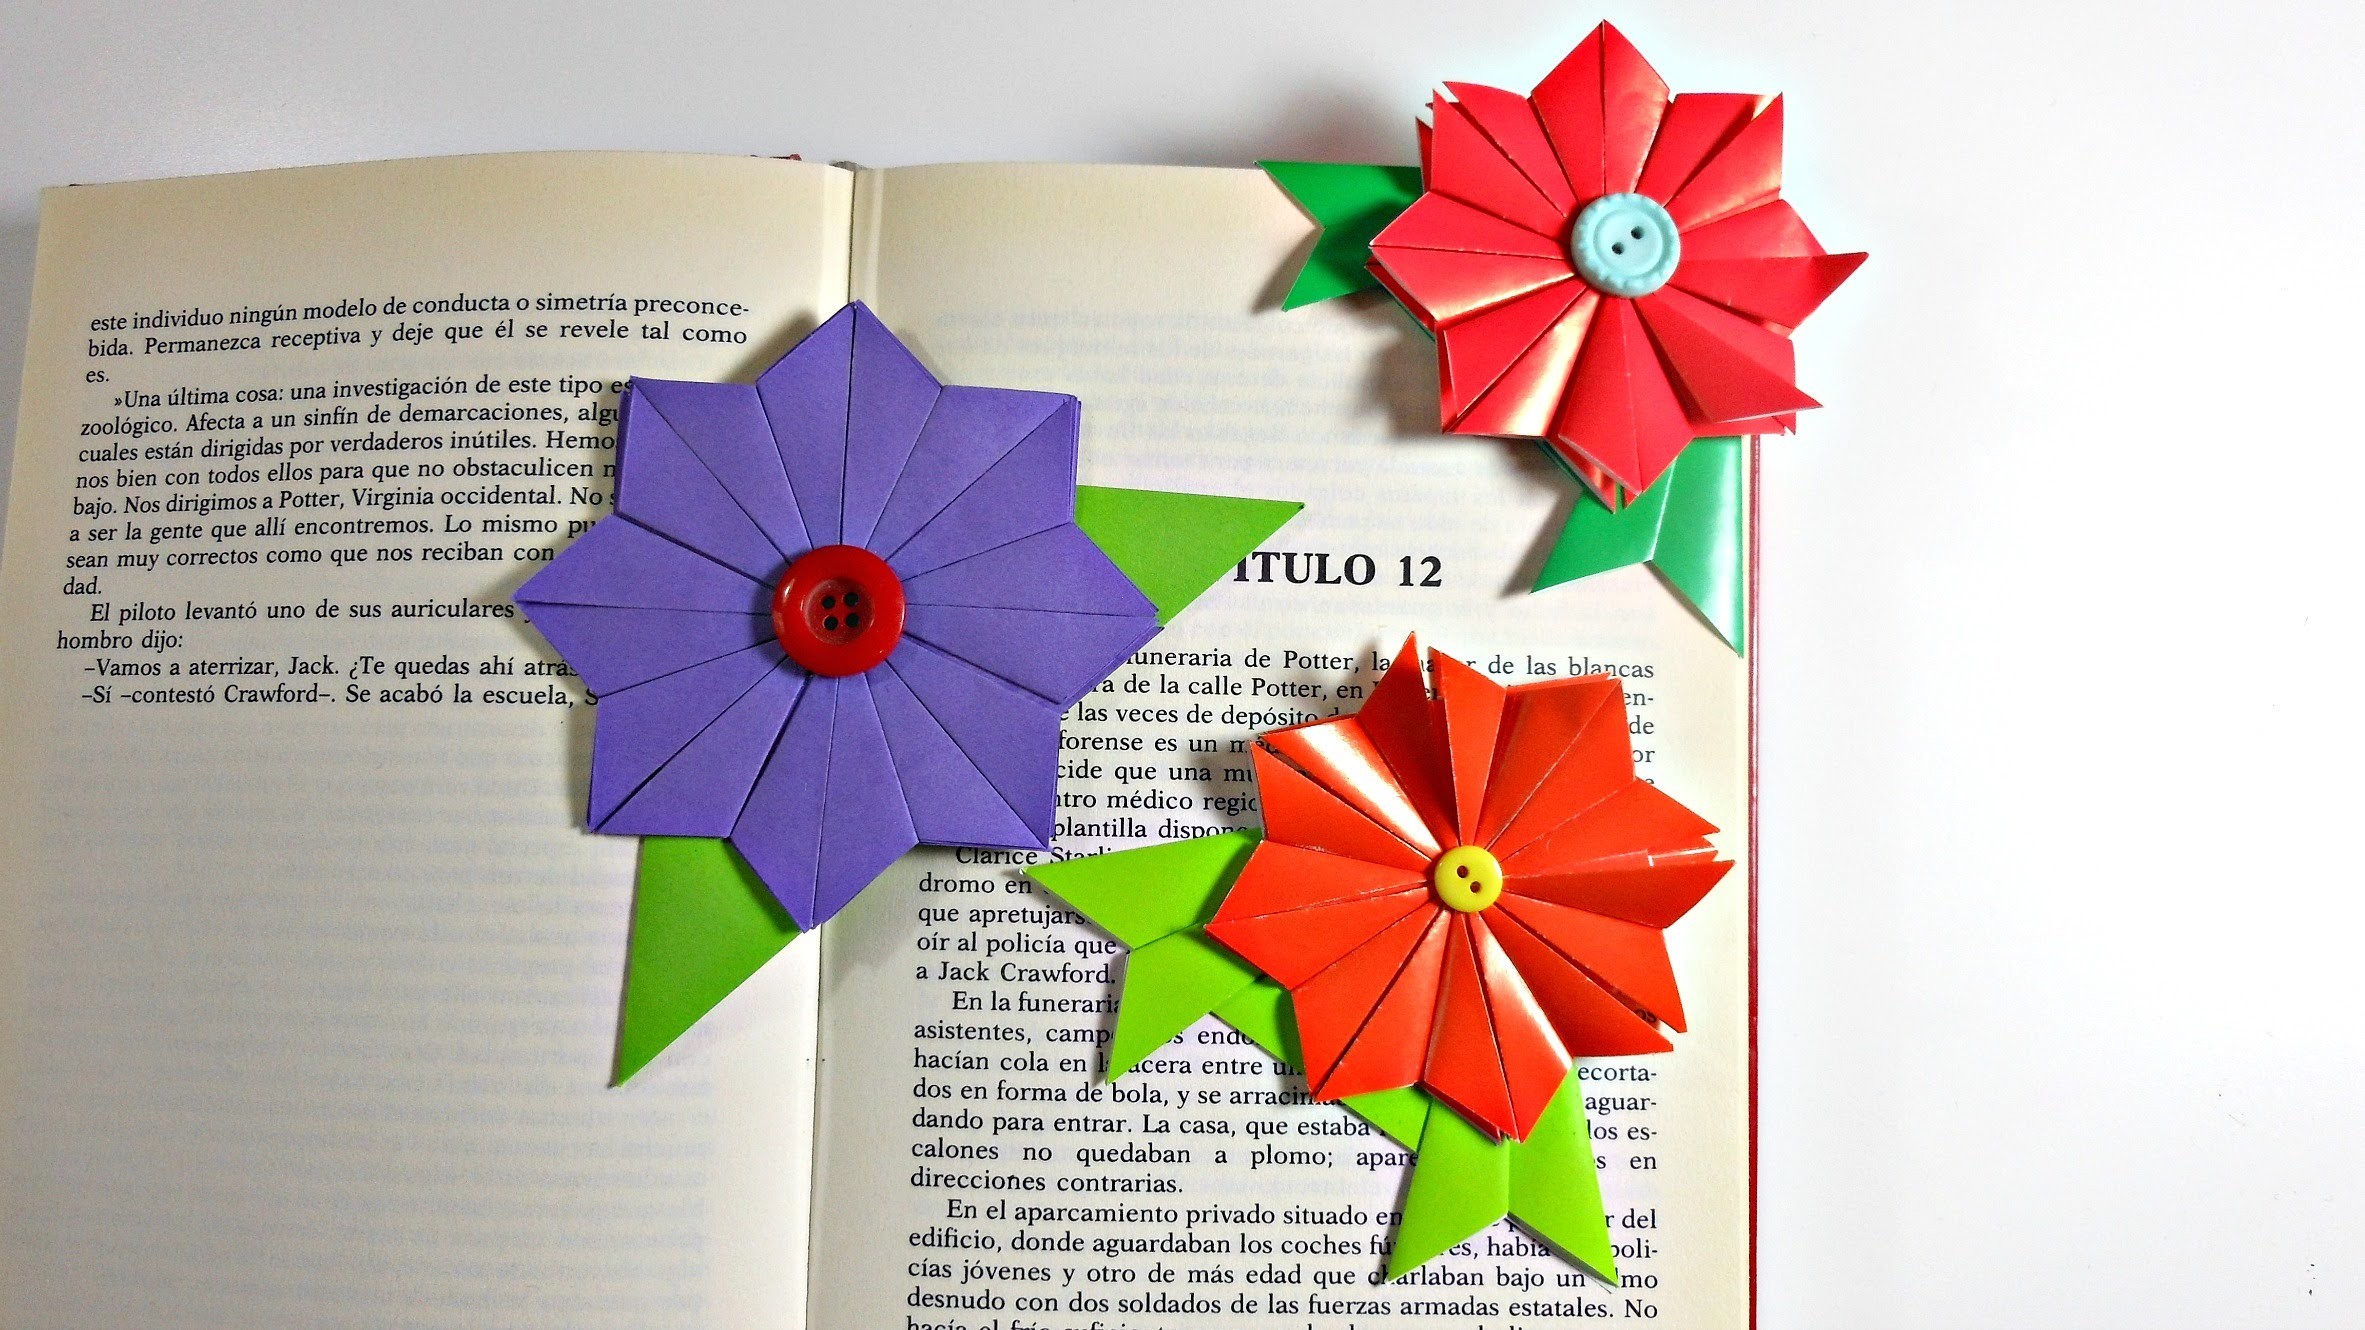 Marcapáginas de origami modular | Flor de origami modular | Origami Bookmark | Mundo@Party